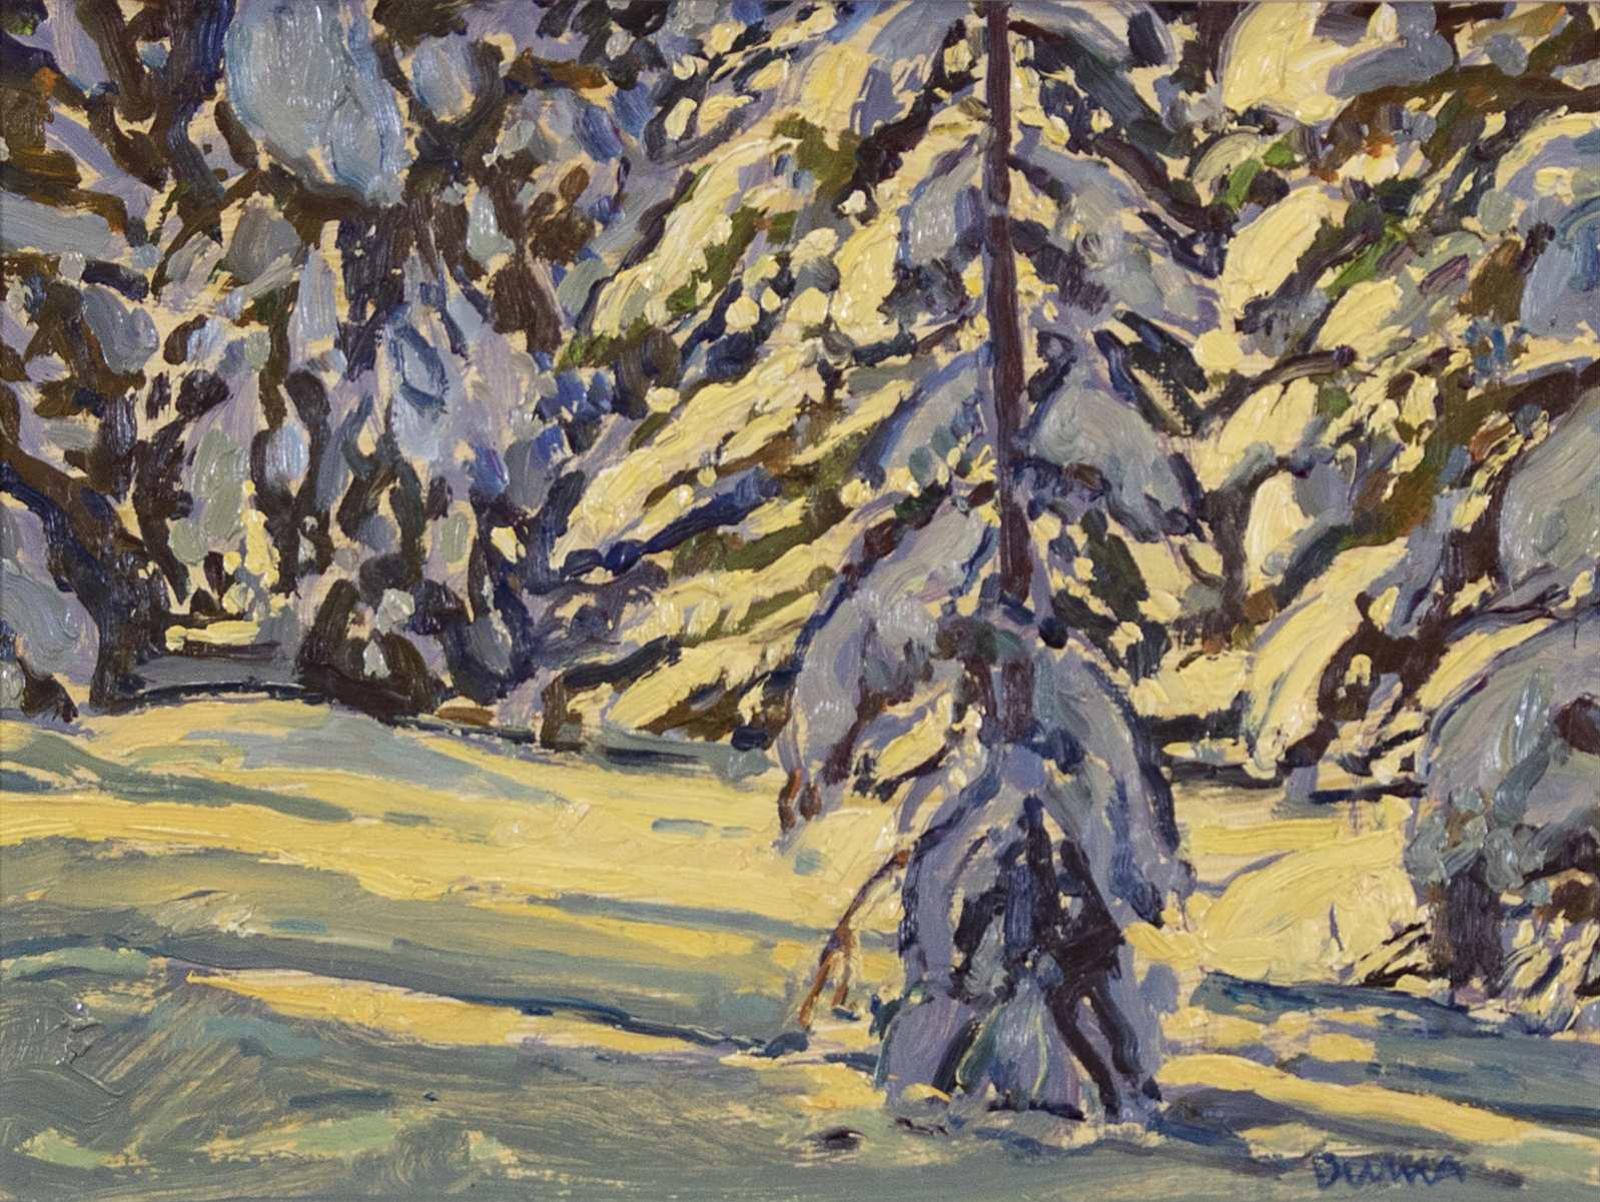 William (Bill) Duma (1936) - Snow Ladened Trees; 1987